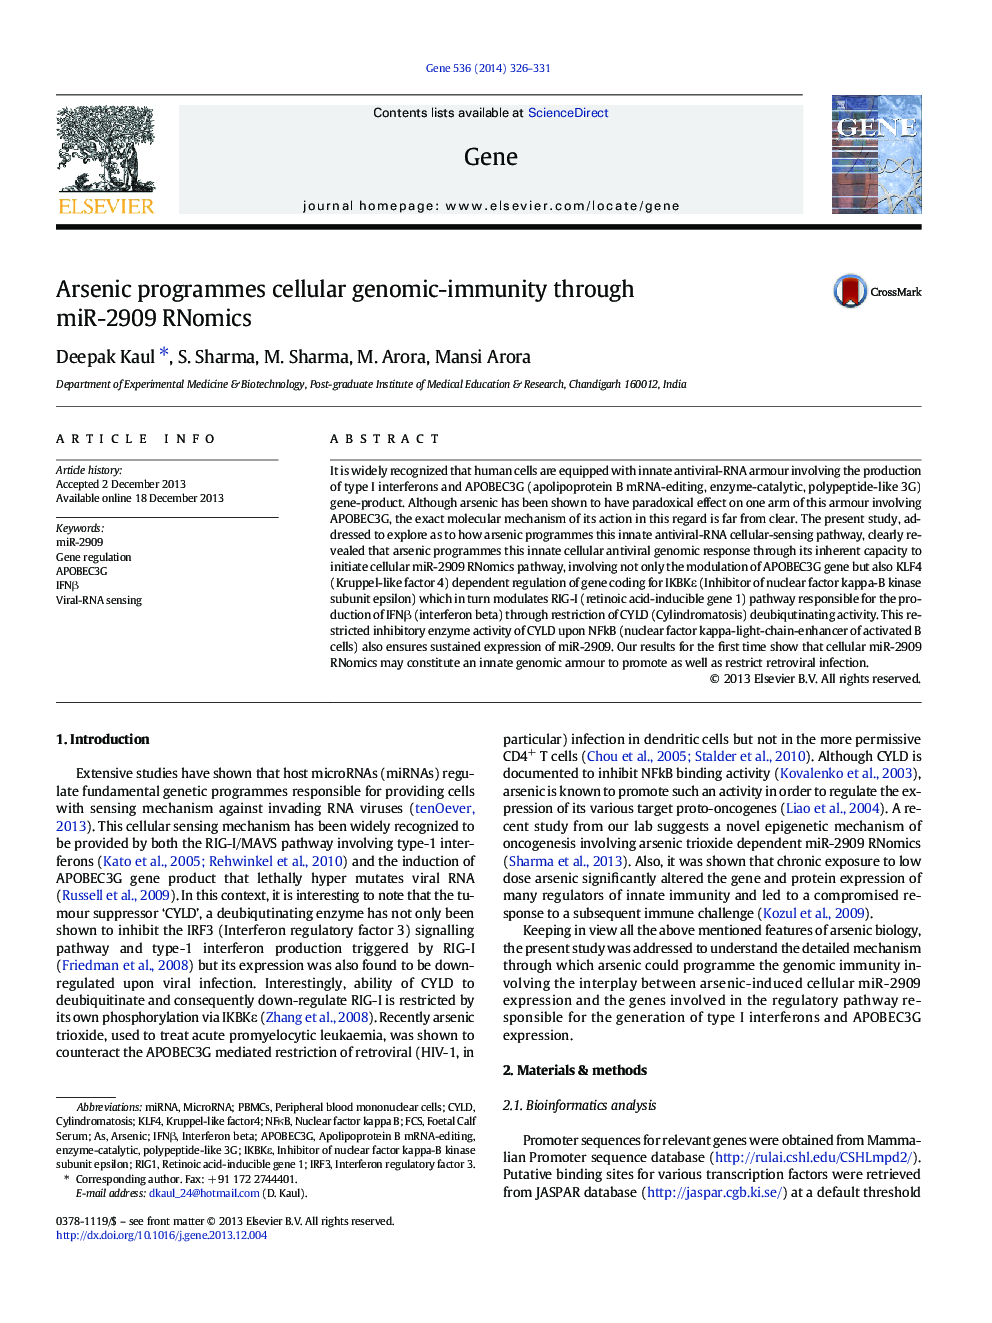 Arsenic programmes cellular genomic-immunity through miR-2909 RNomics